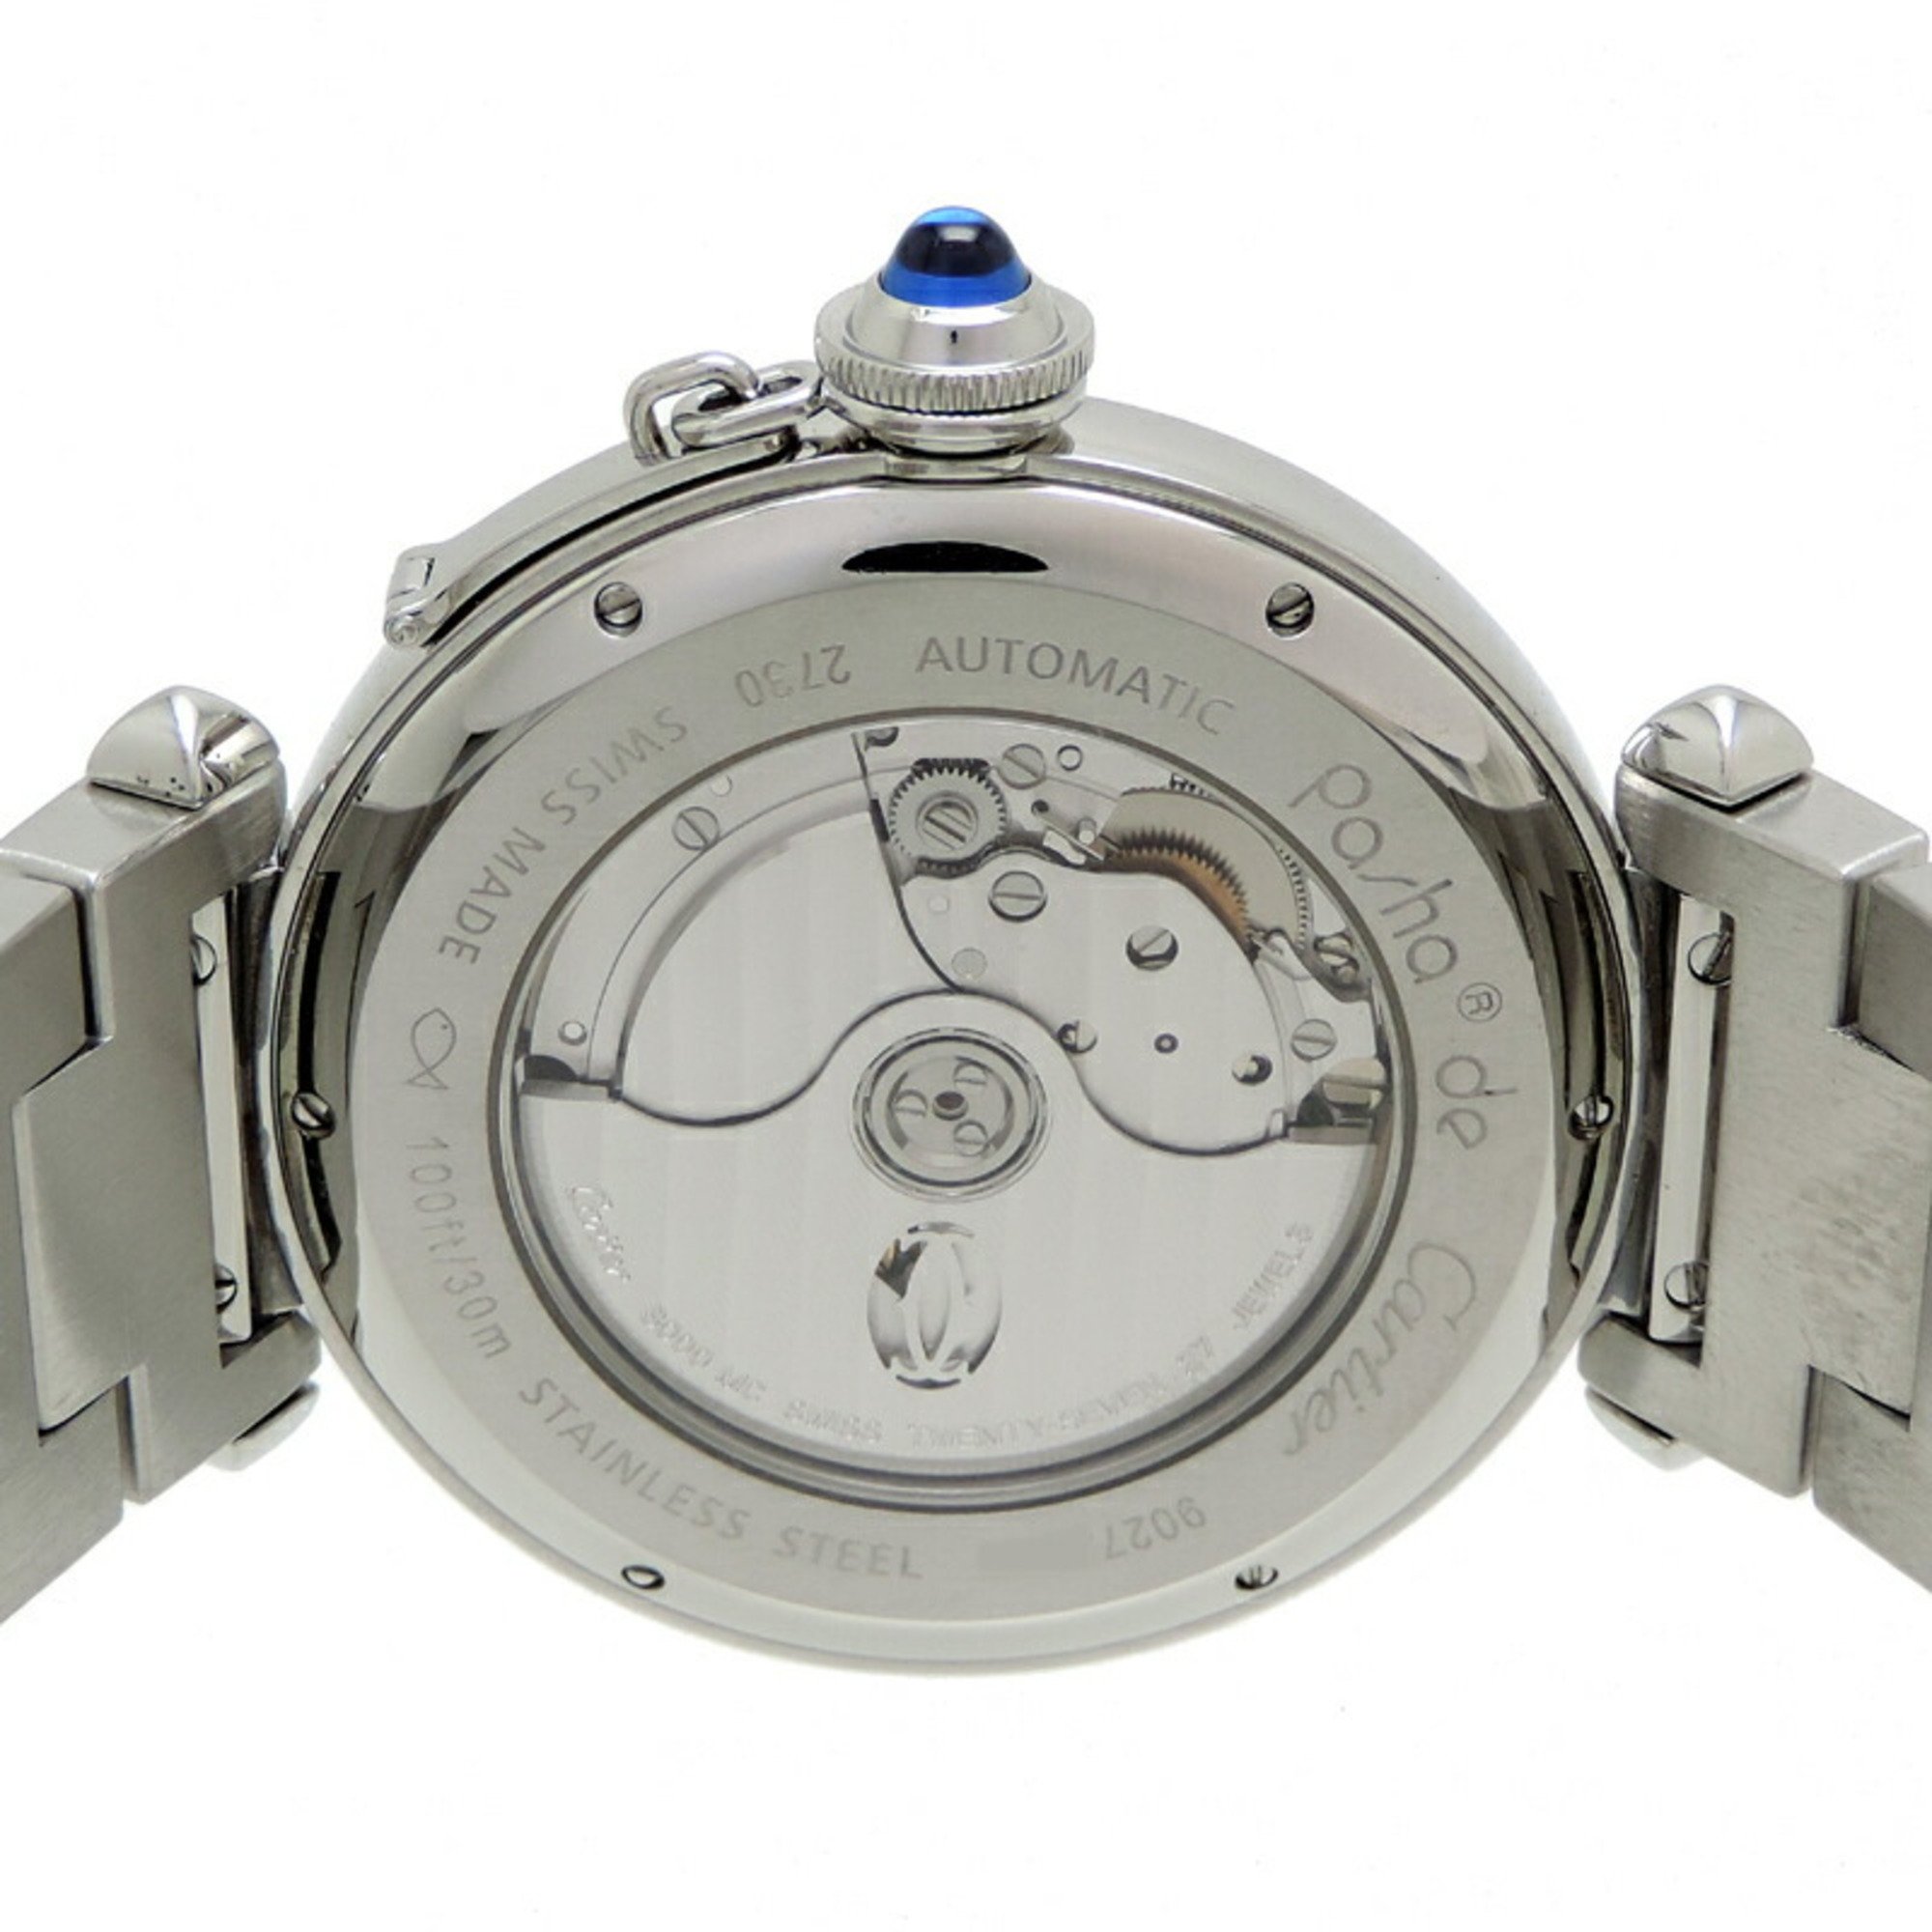 Cartier Pasha 42MM Men's Watch W3107255